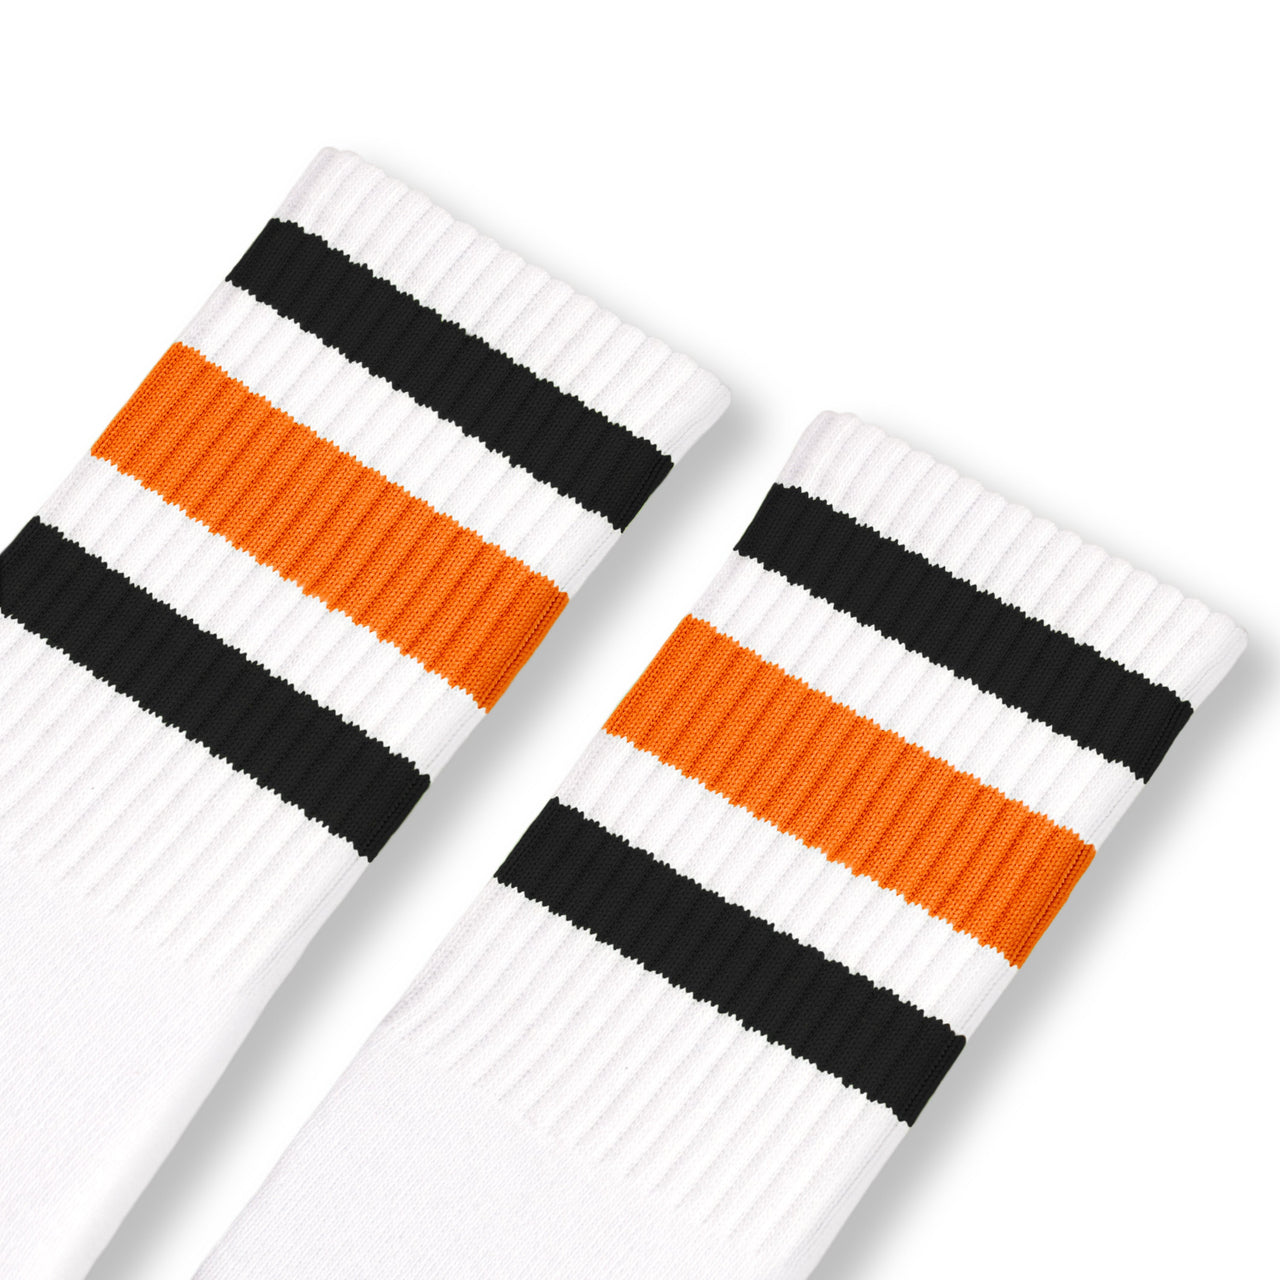 White w/ black & orange stripes